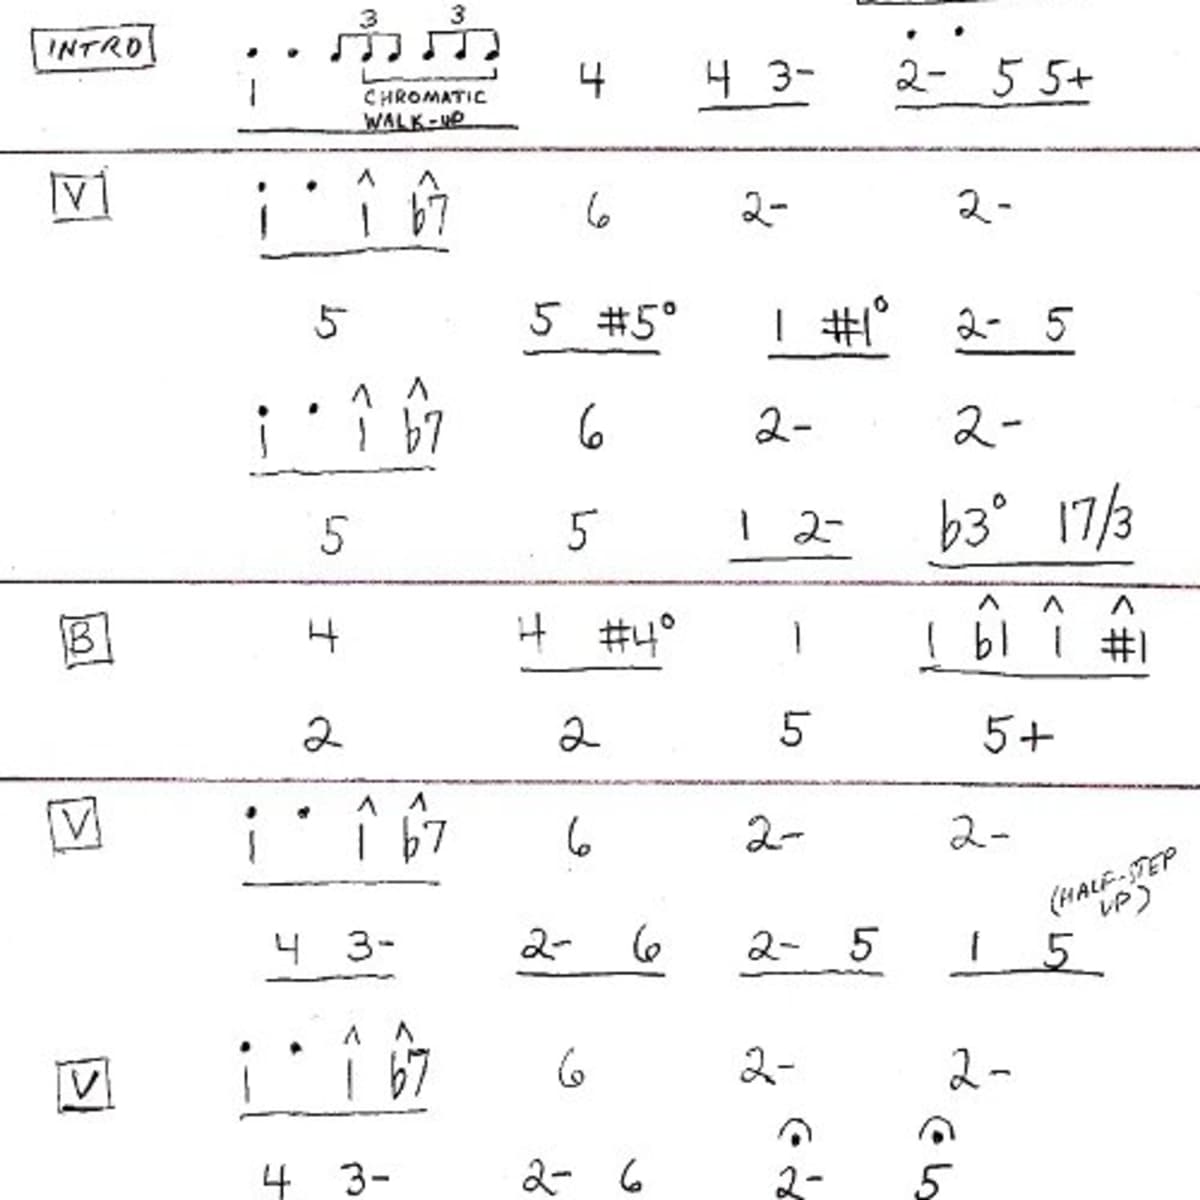 victory in jesus chords nashville number system chart